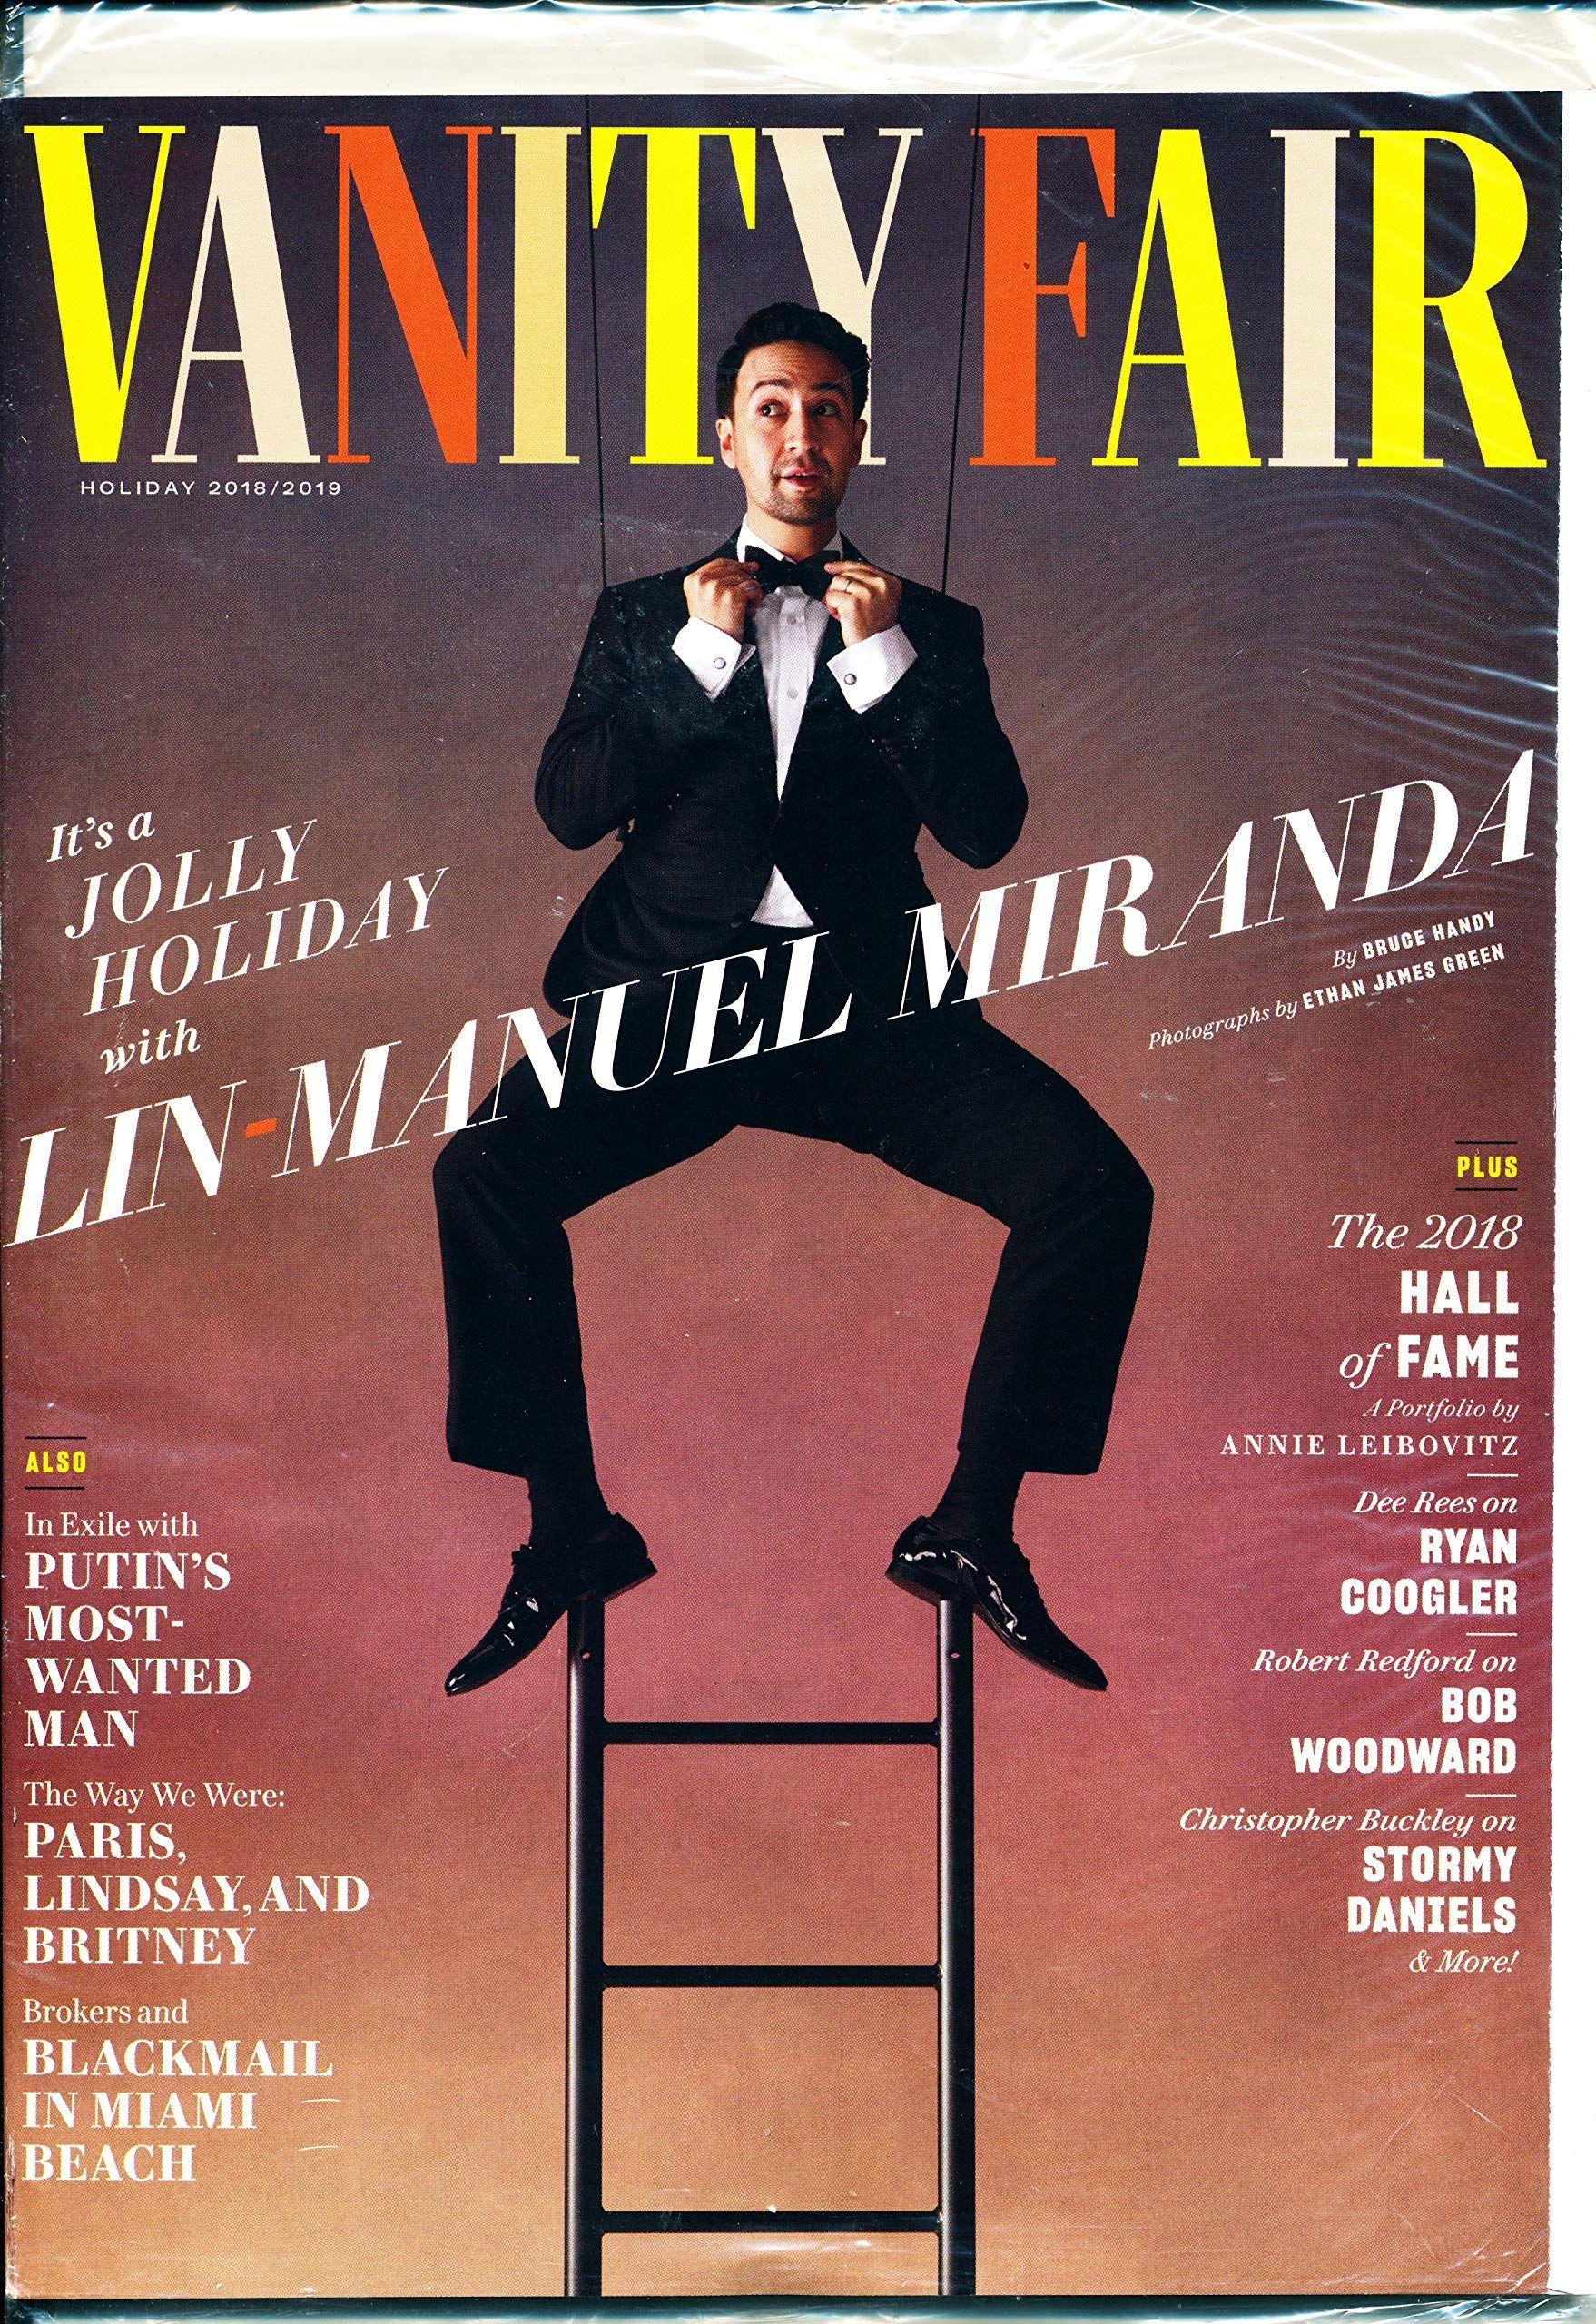 Vanity Fair Magazine Logo - Vanity Fair Magazine (Holiday, 2018/2019) Lin-Manuel Miranda Cover ...